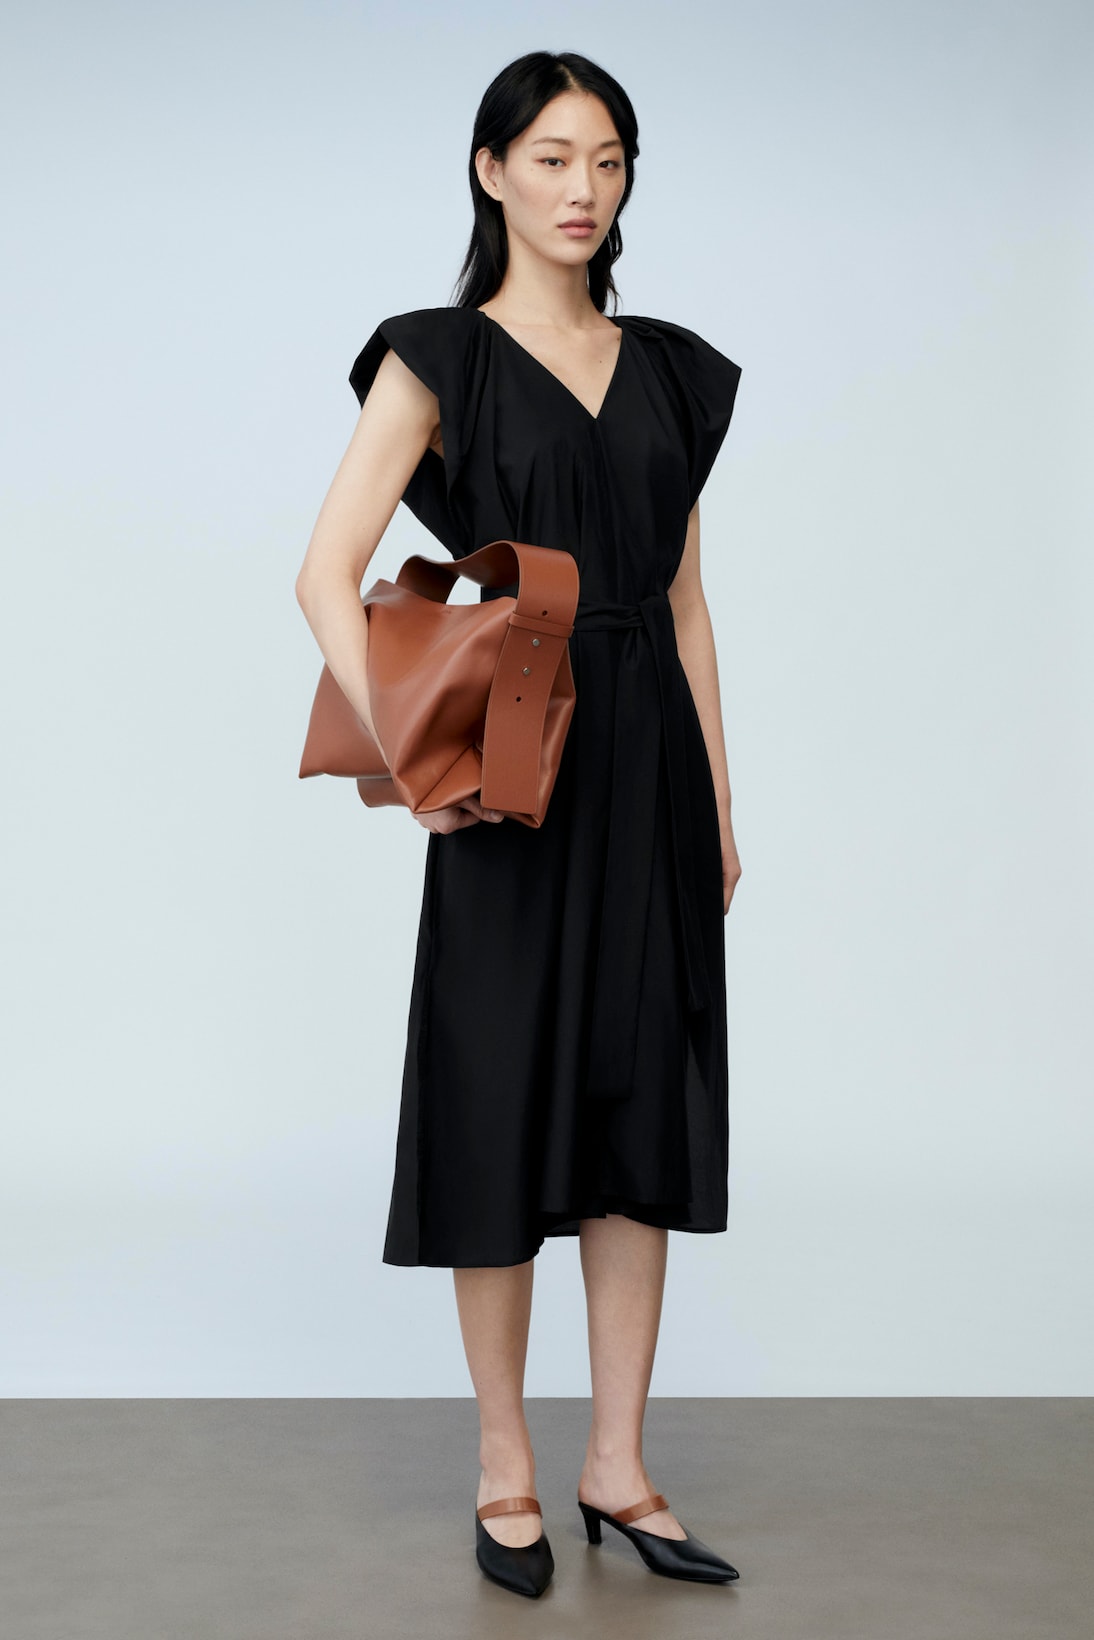 sora choi cos spring womenswear summer collection lookbook black dress brown bag heels shoes sandals